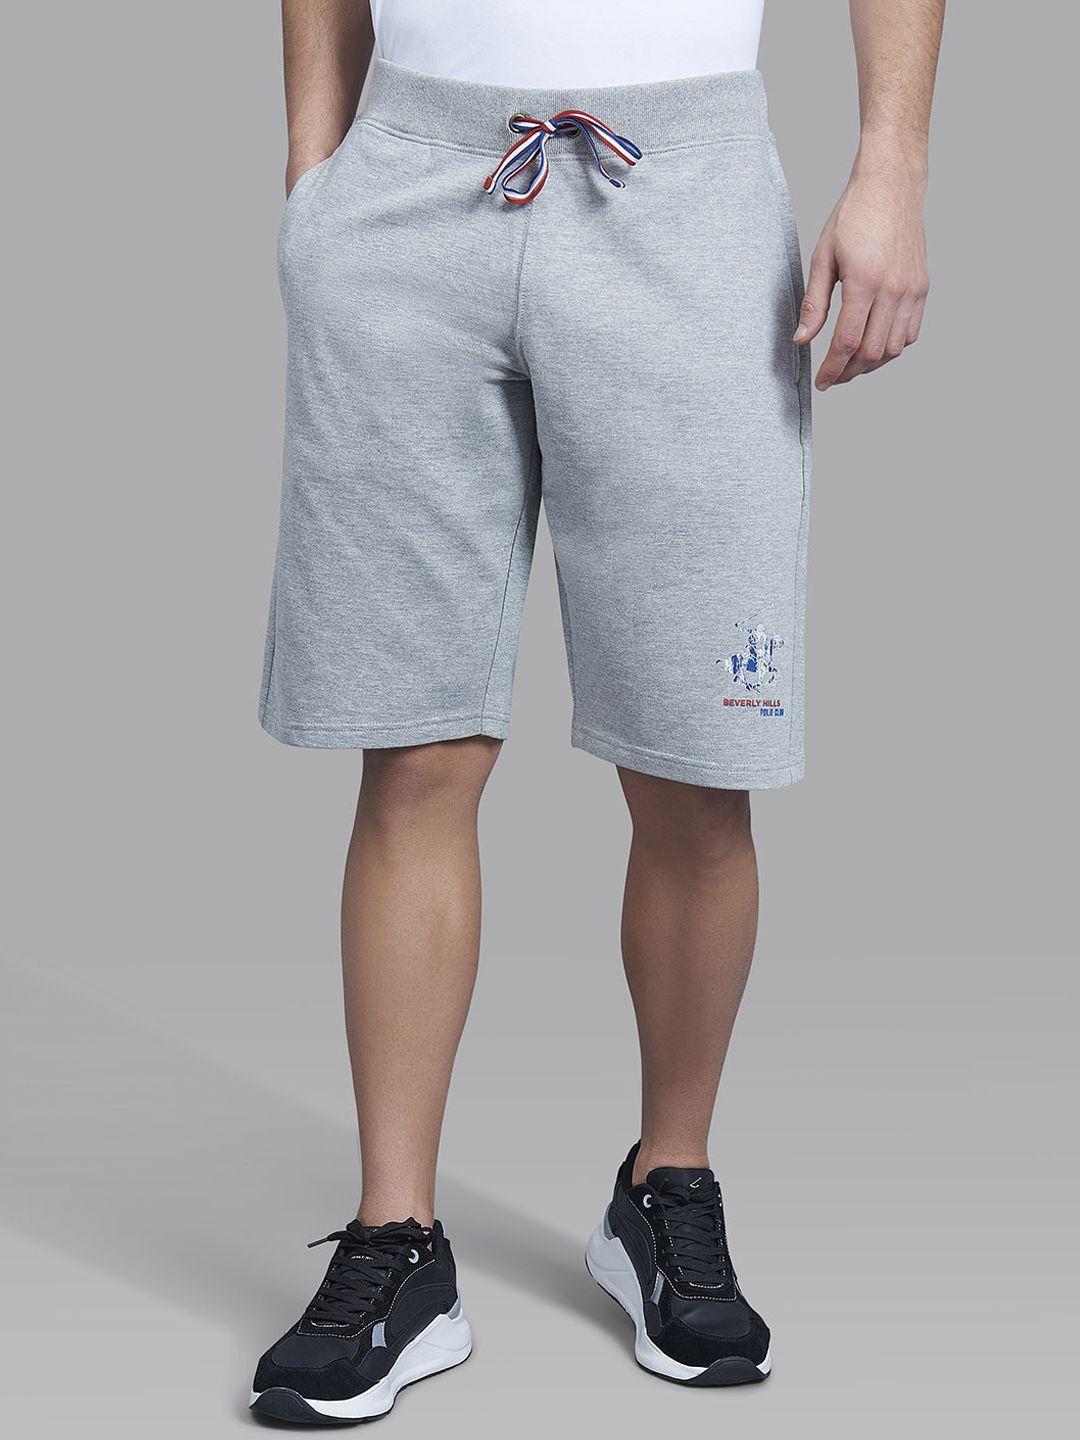 beverly hills polo club men grey cotton shorts